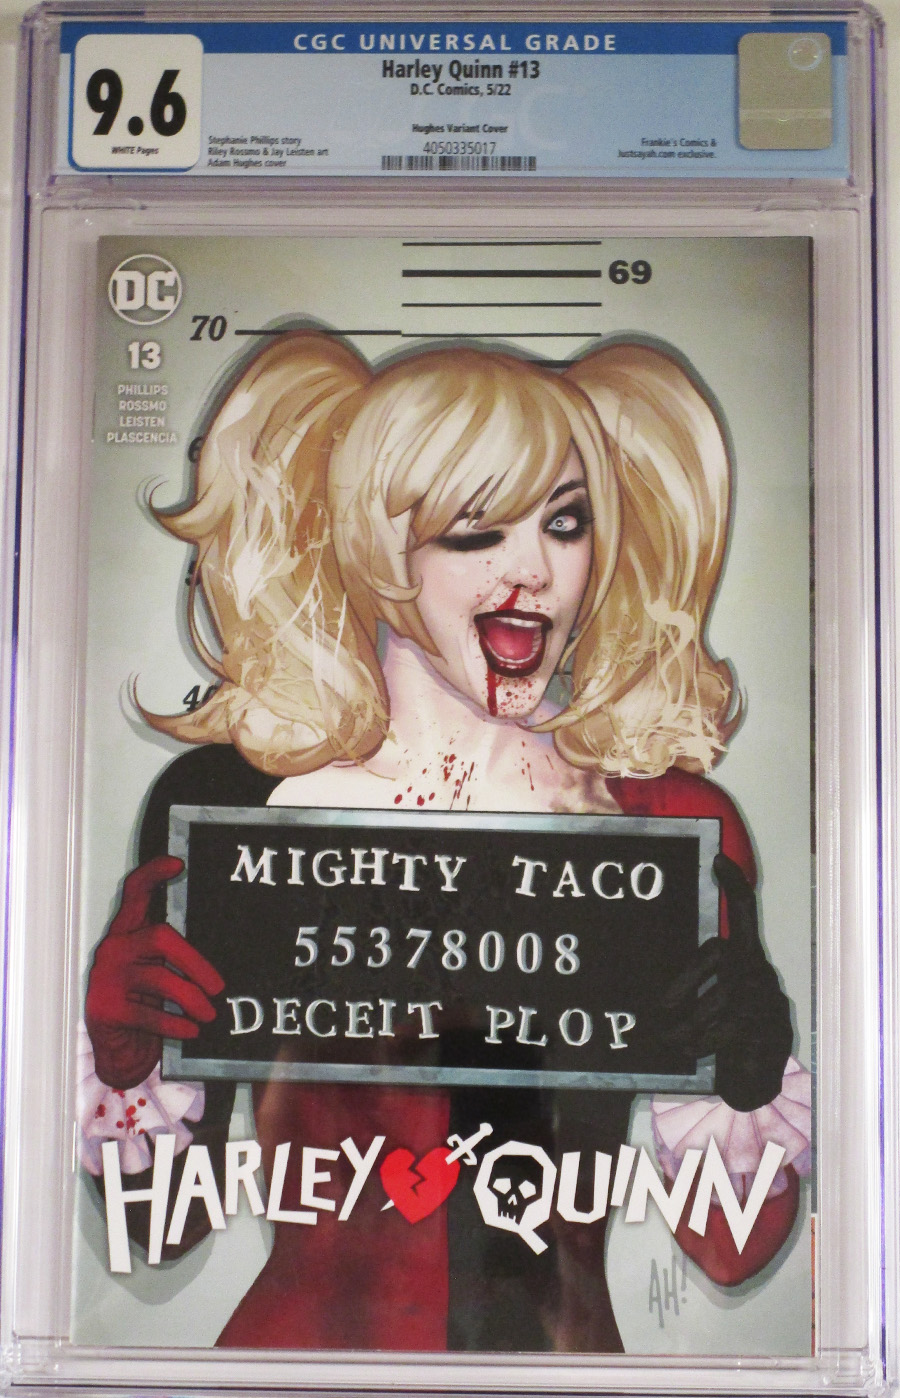 Harley Quinn Vol 4 #13 Cover E CGC 9.6 Variant Adam Hughes Cover